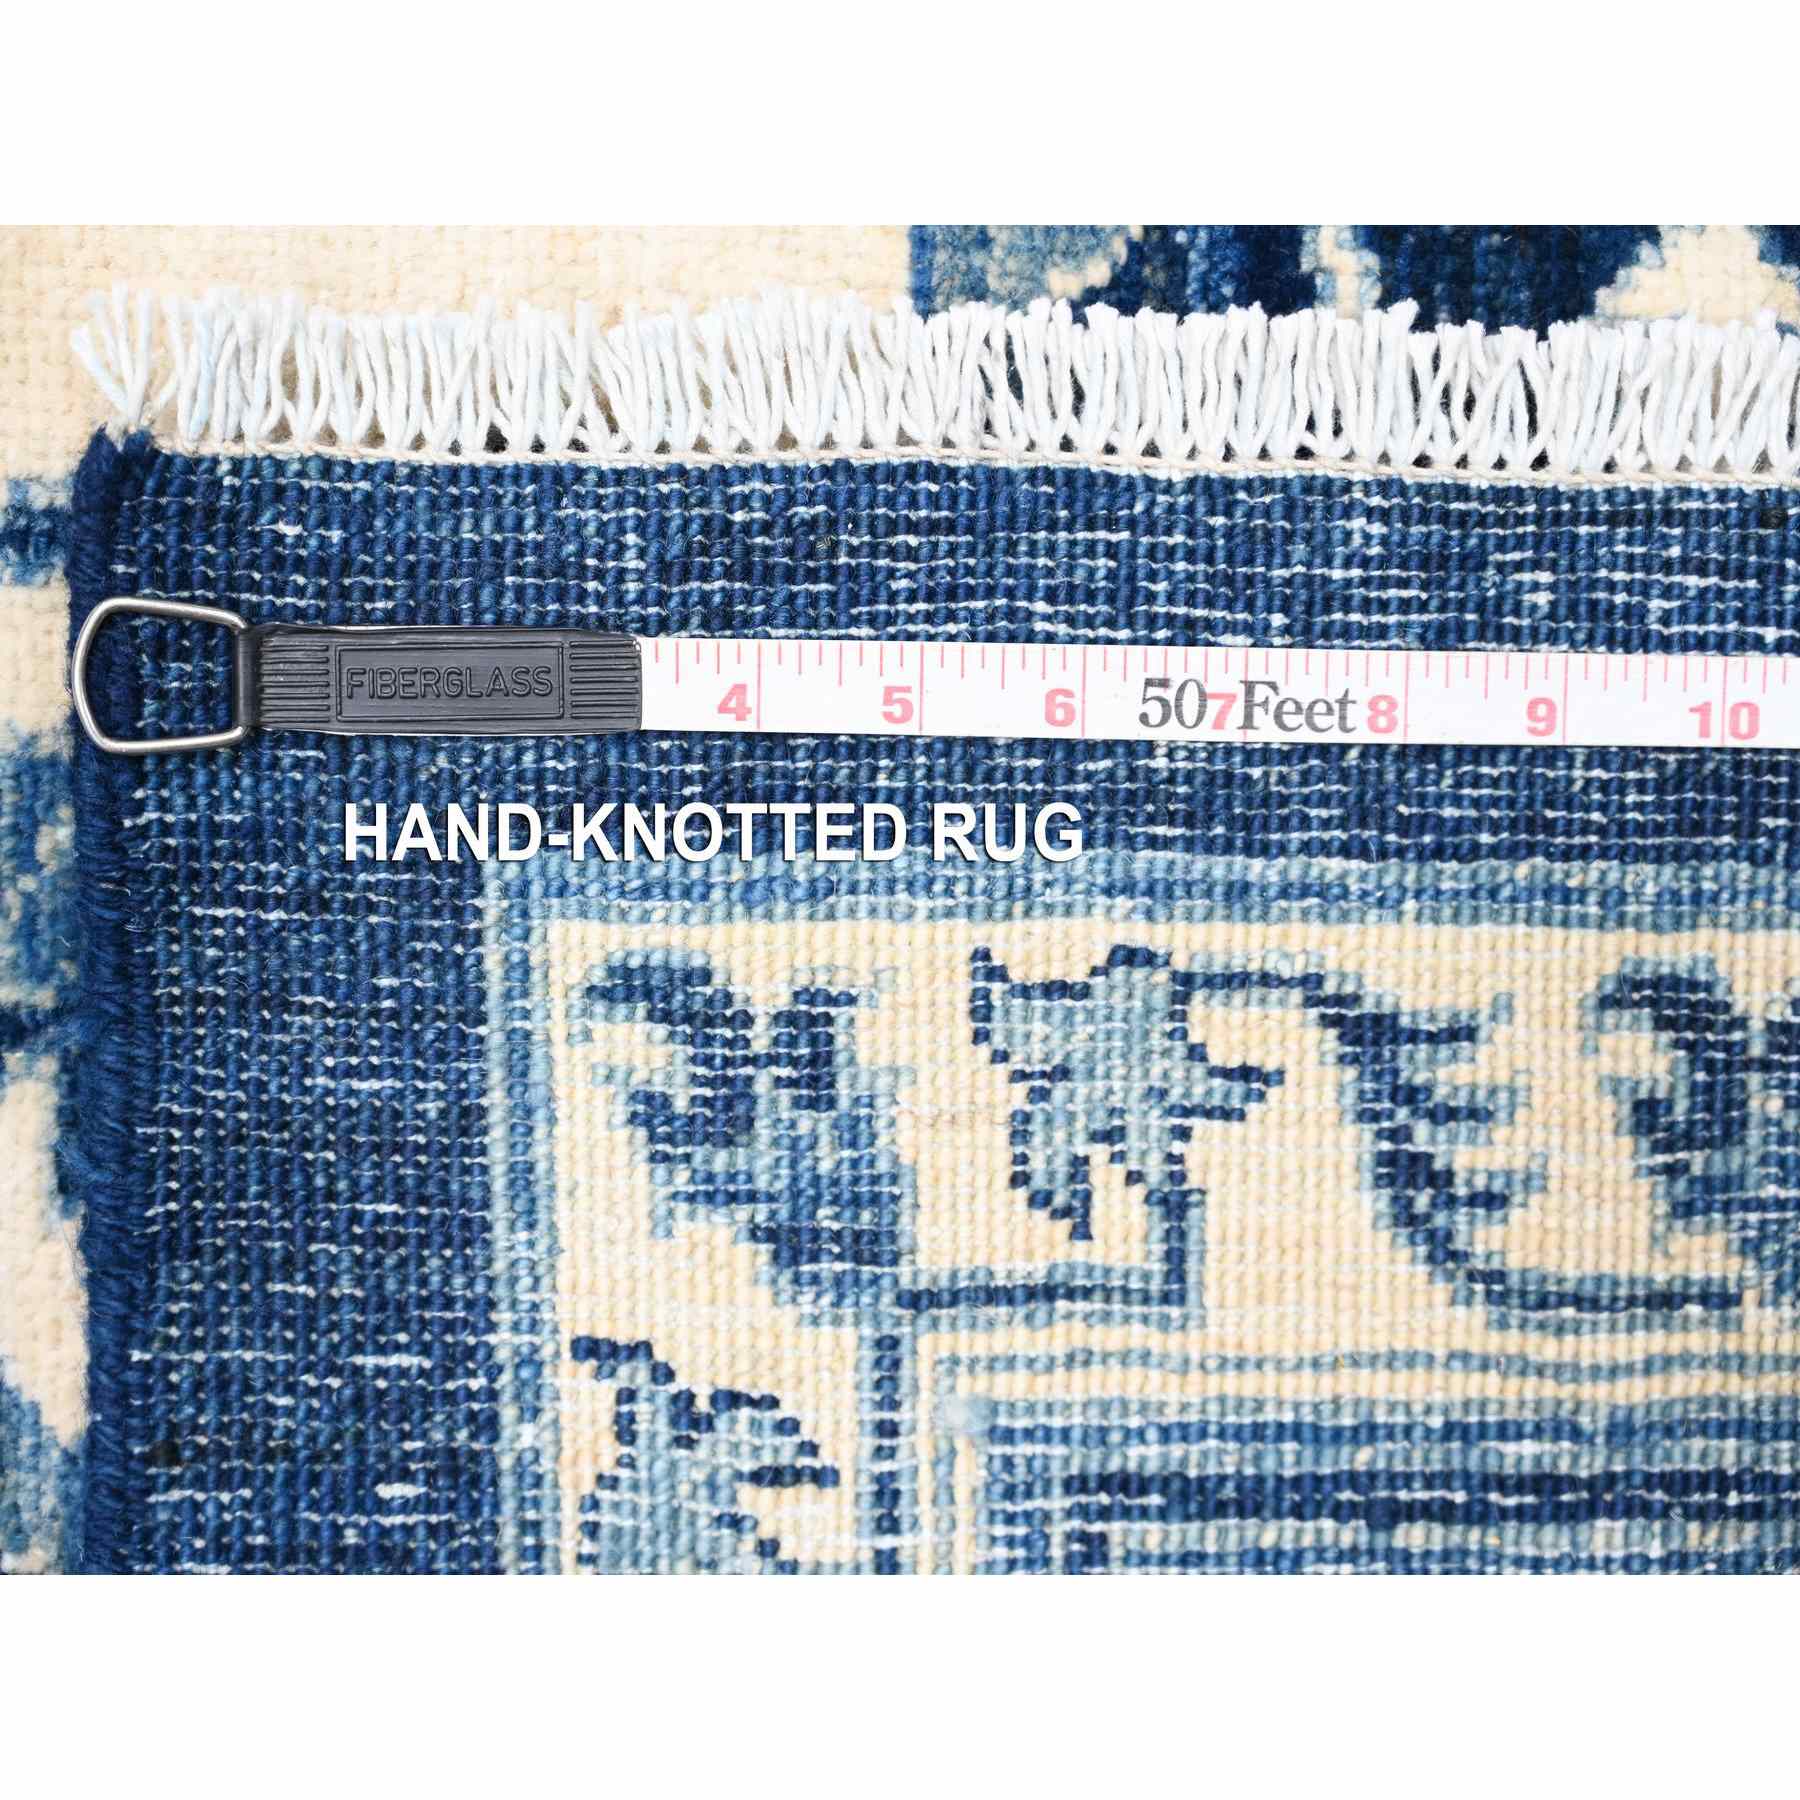 Heriz-Hand-Knotted-Rug-443220